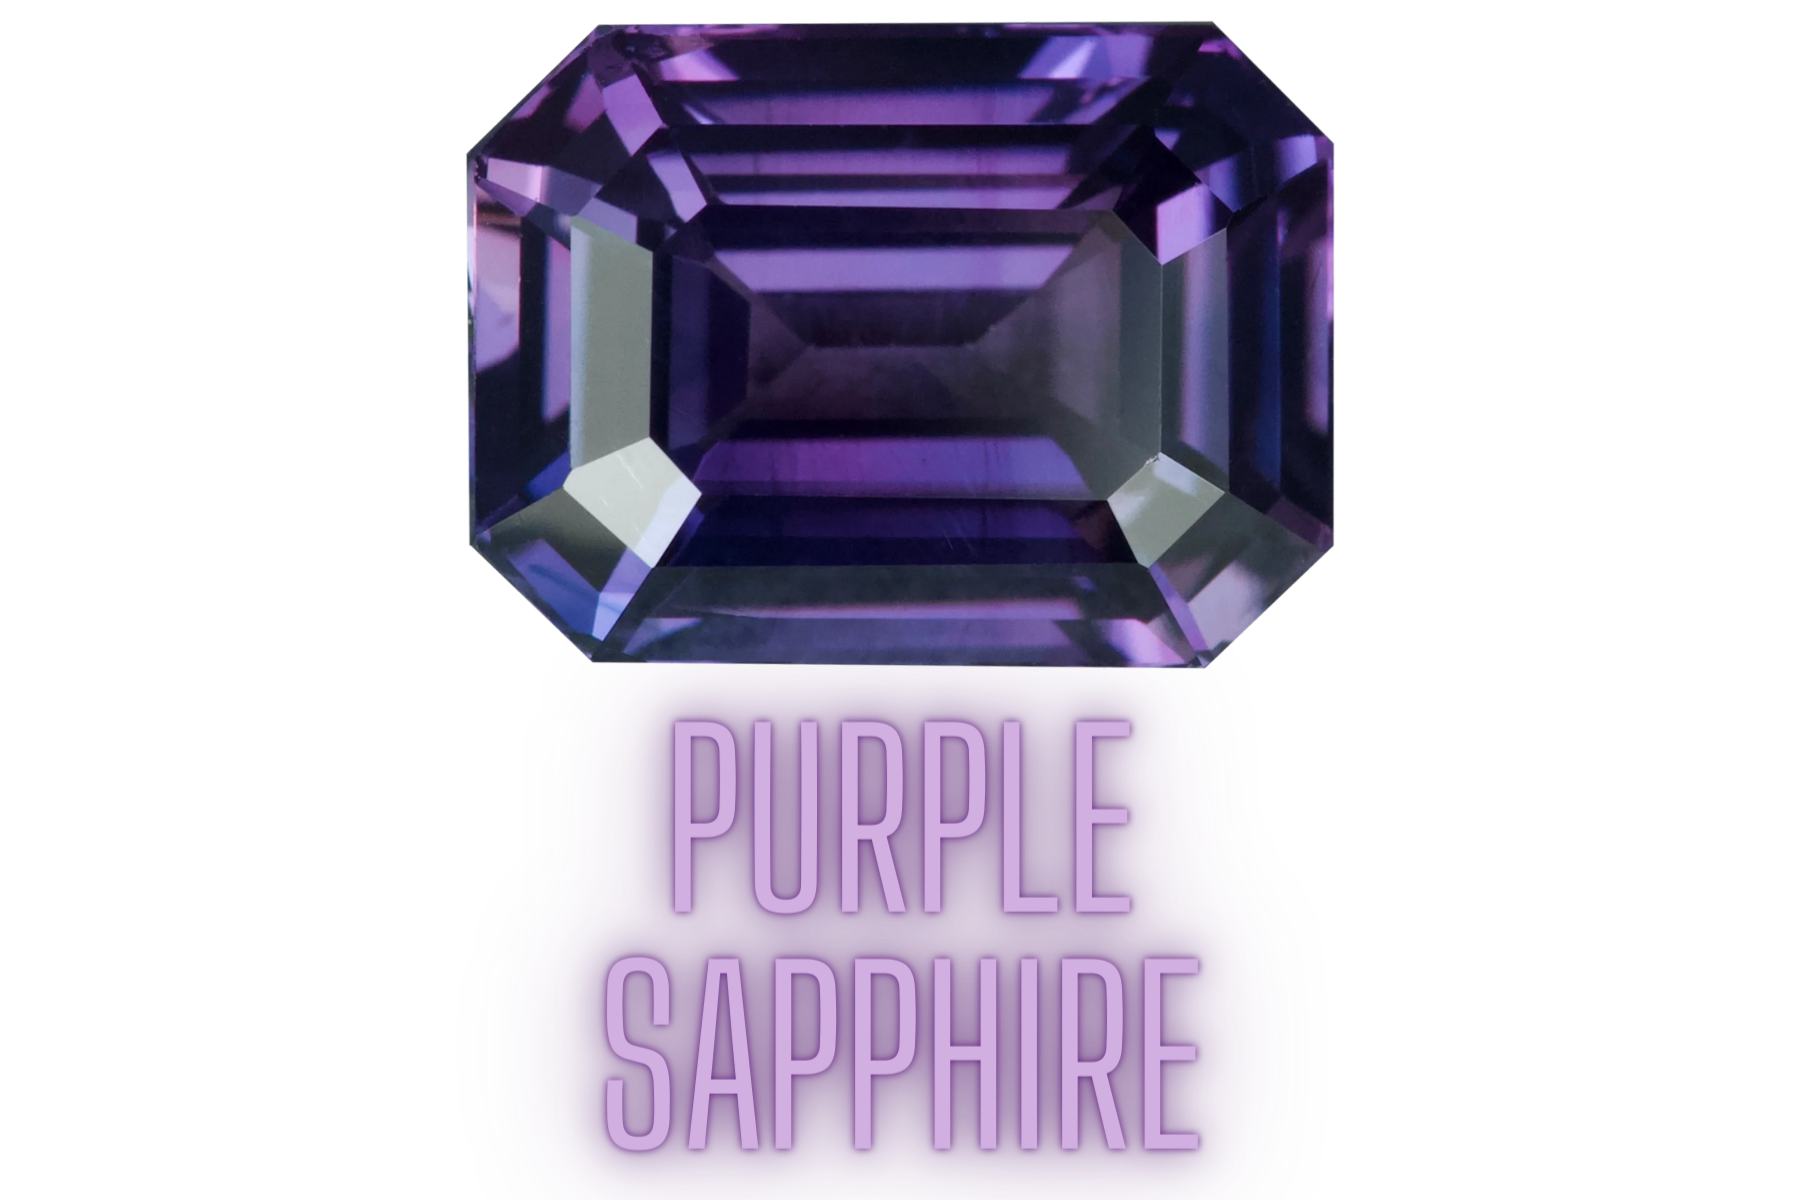 Octagonal purple sapphire stone